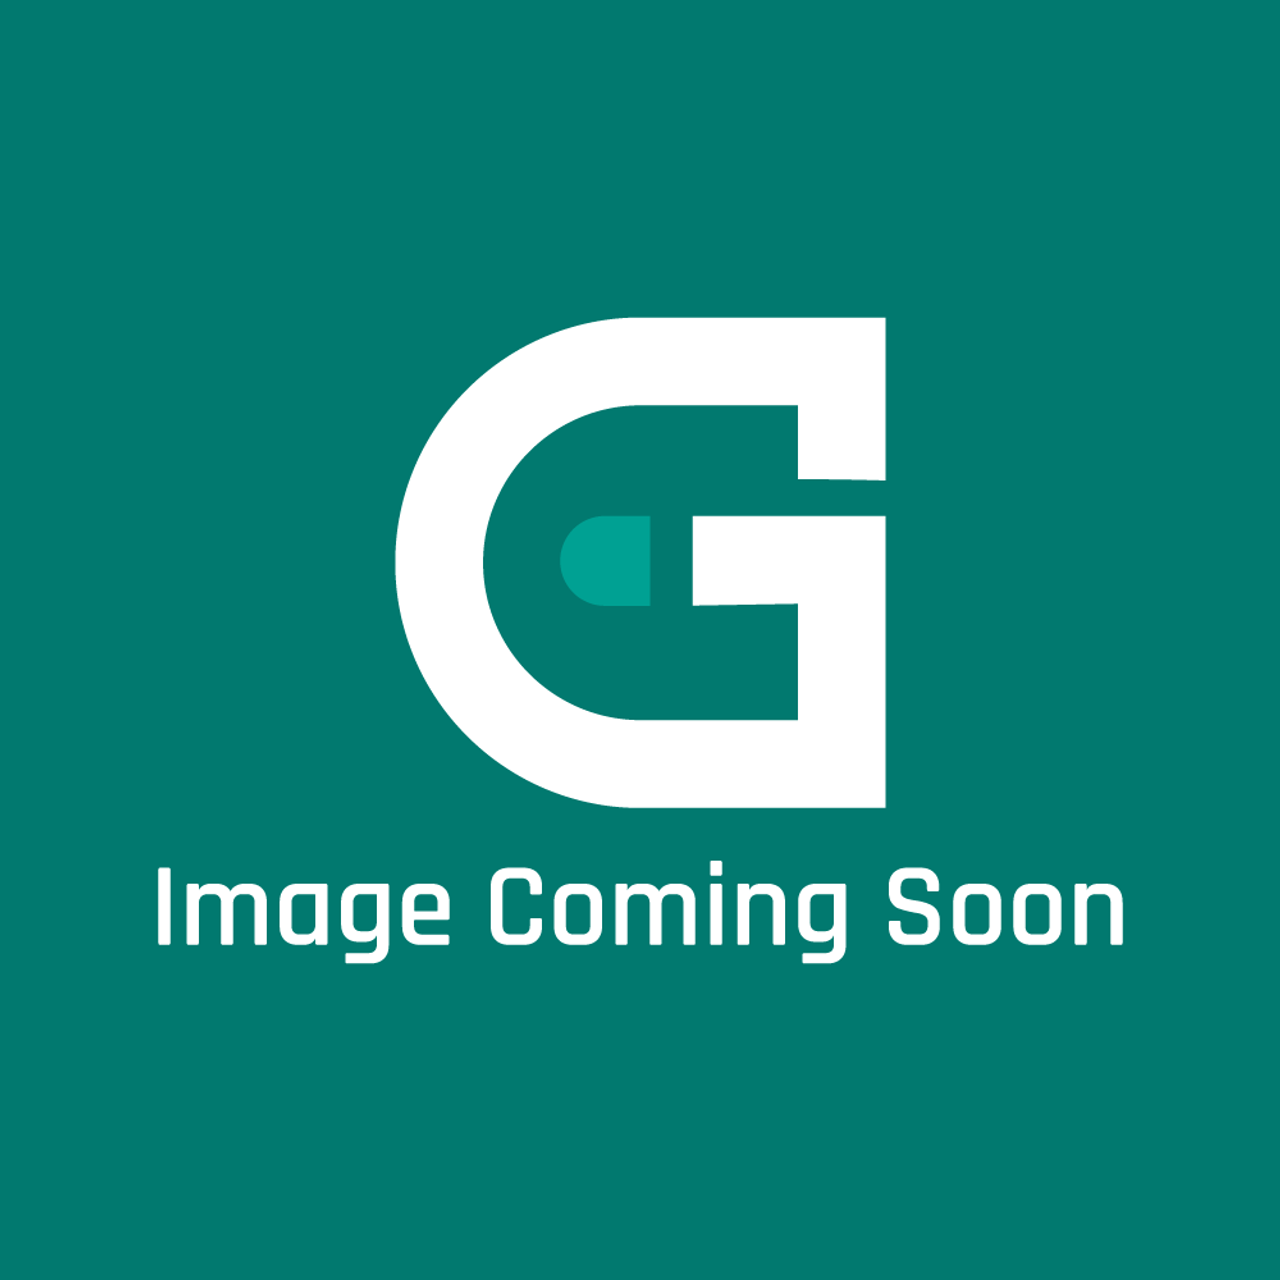 Frigidaire - Electrolux 5304499939 Compressor - Image Coming Soon!